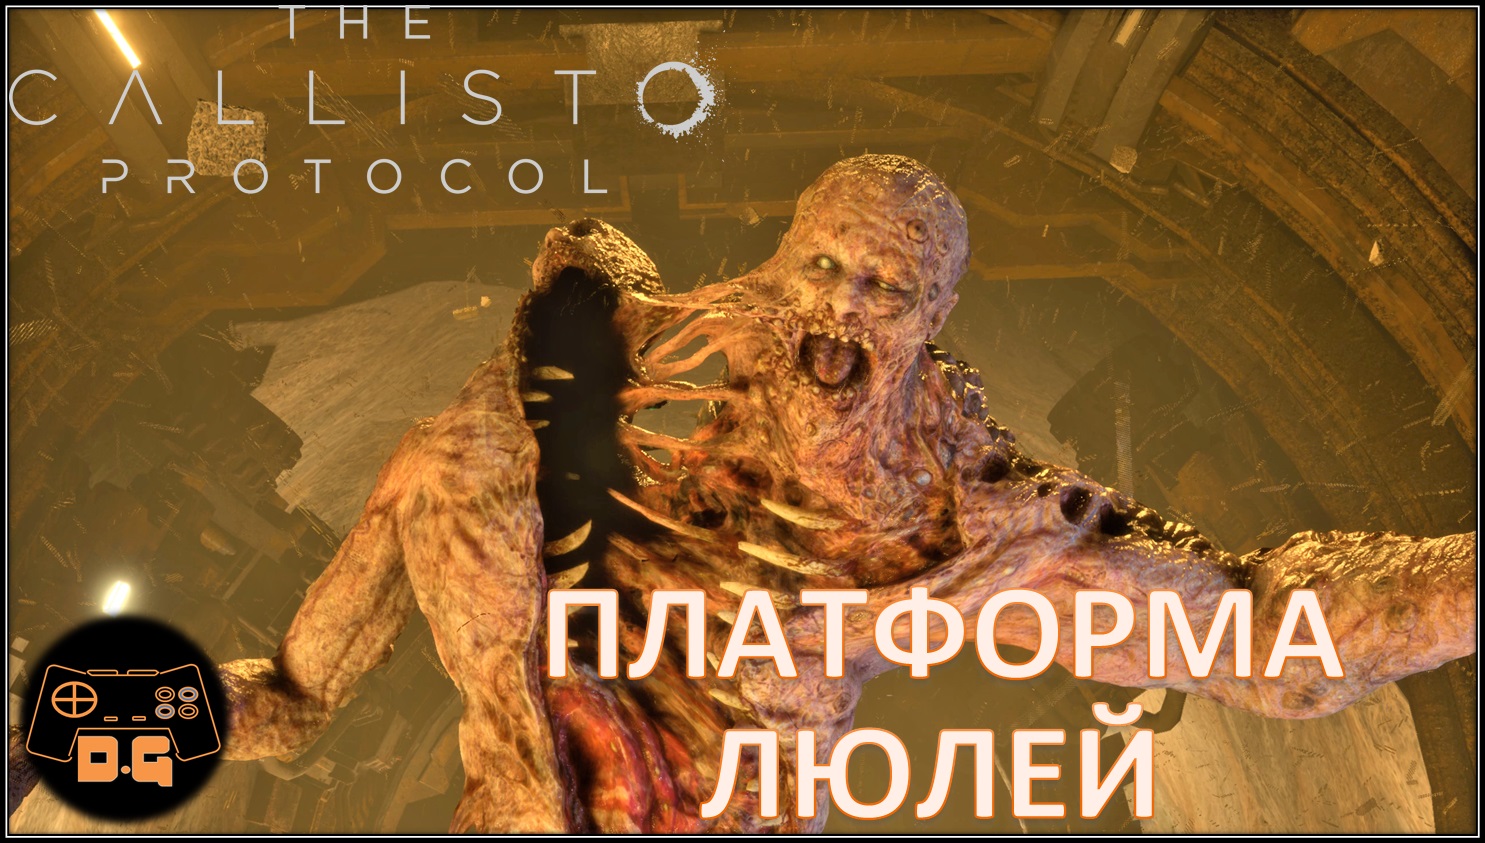 The Callisto Protocol ◈ Платформа ЛЮЛЕЙ ◈ АРКАС ◈ #9